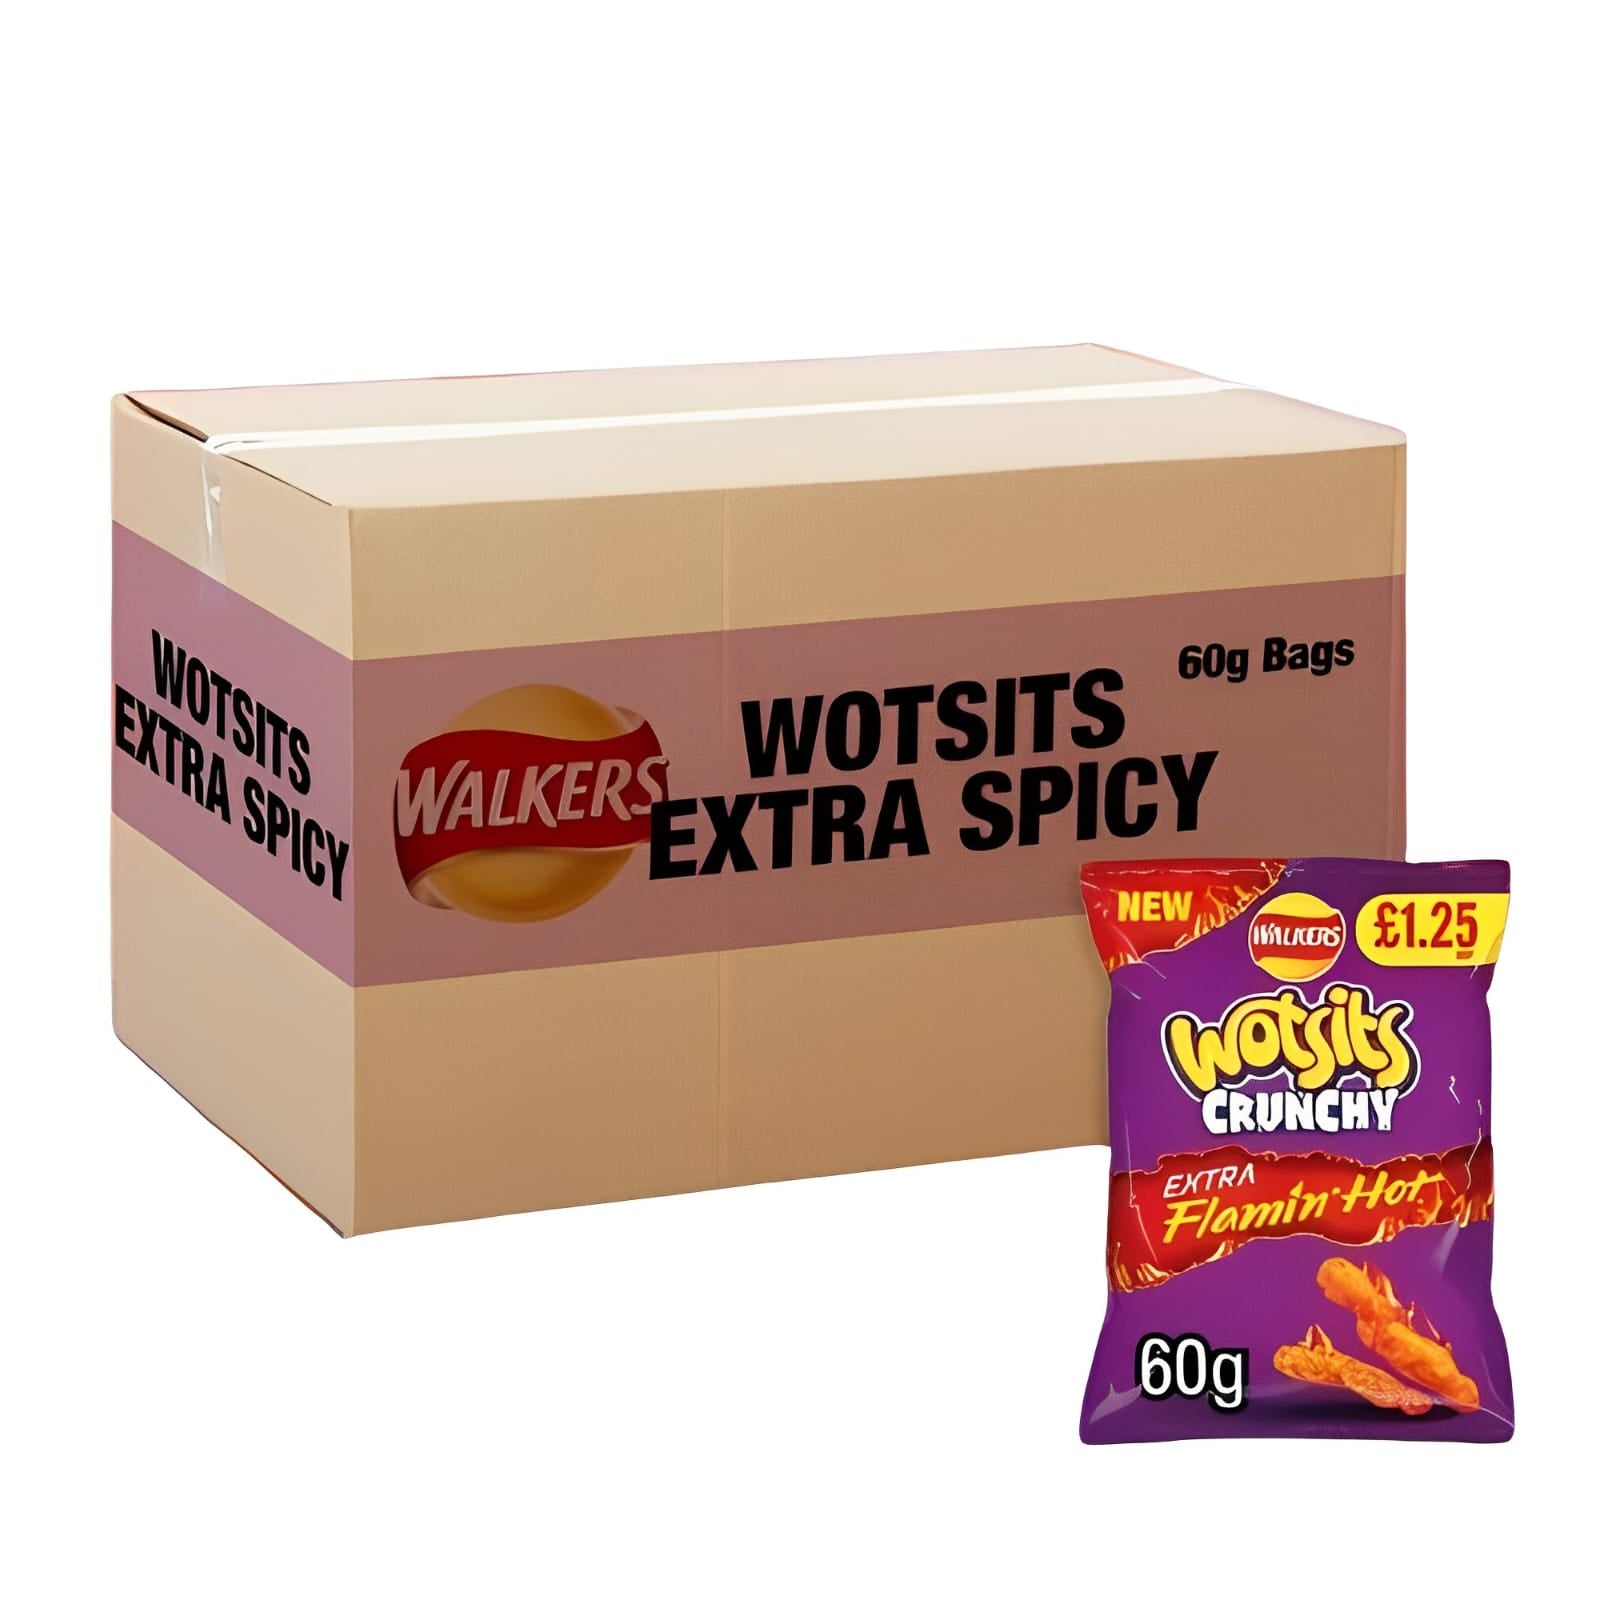 Walkers Wotsits Crunchy Extra Flamin' Hot Crisps - 60g - Pack of 15